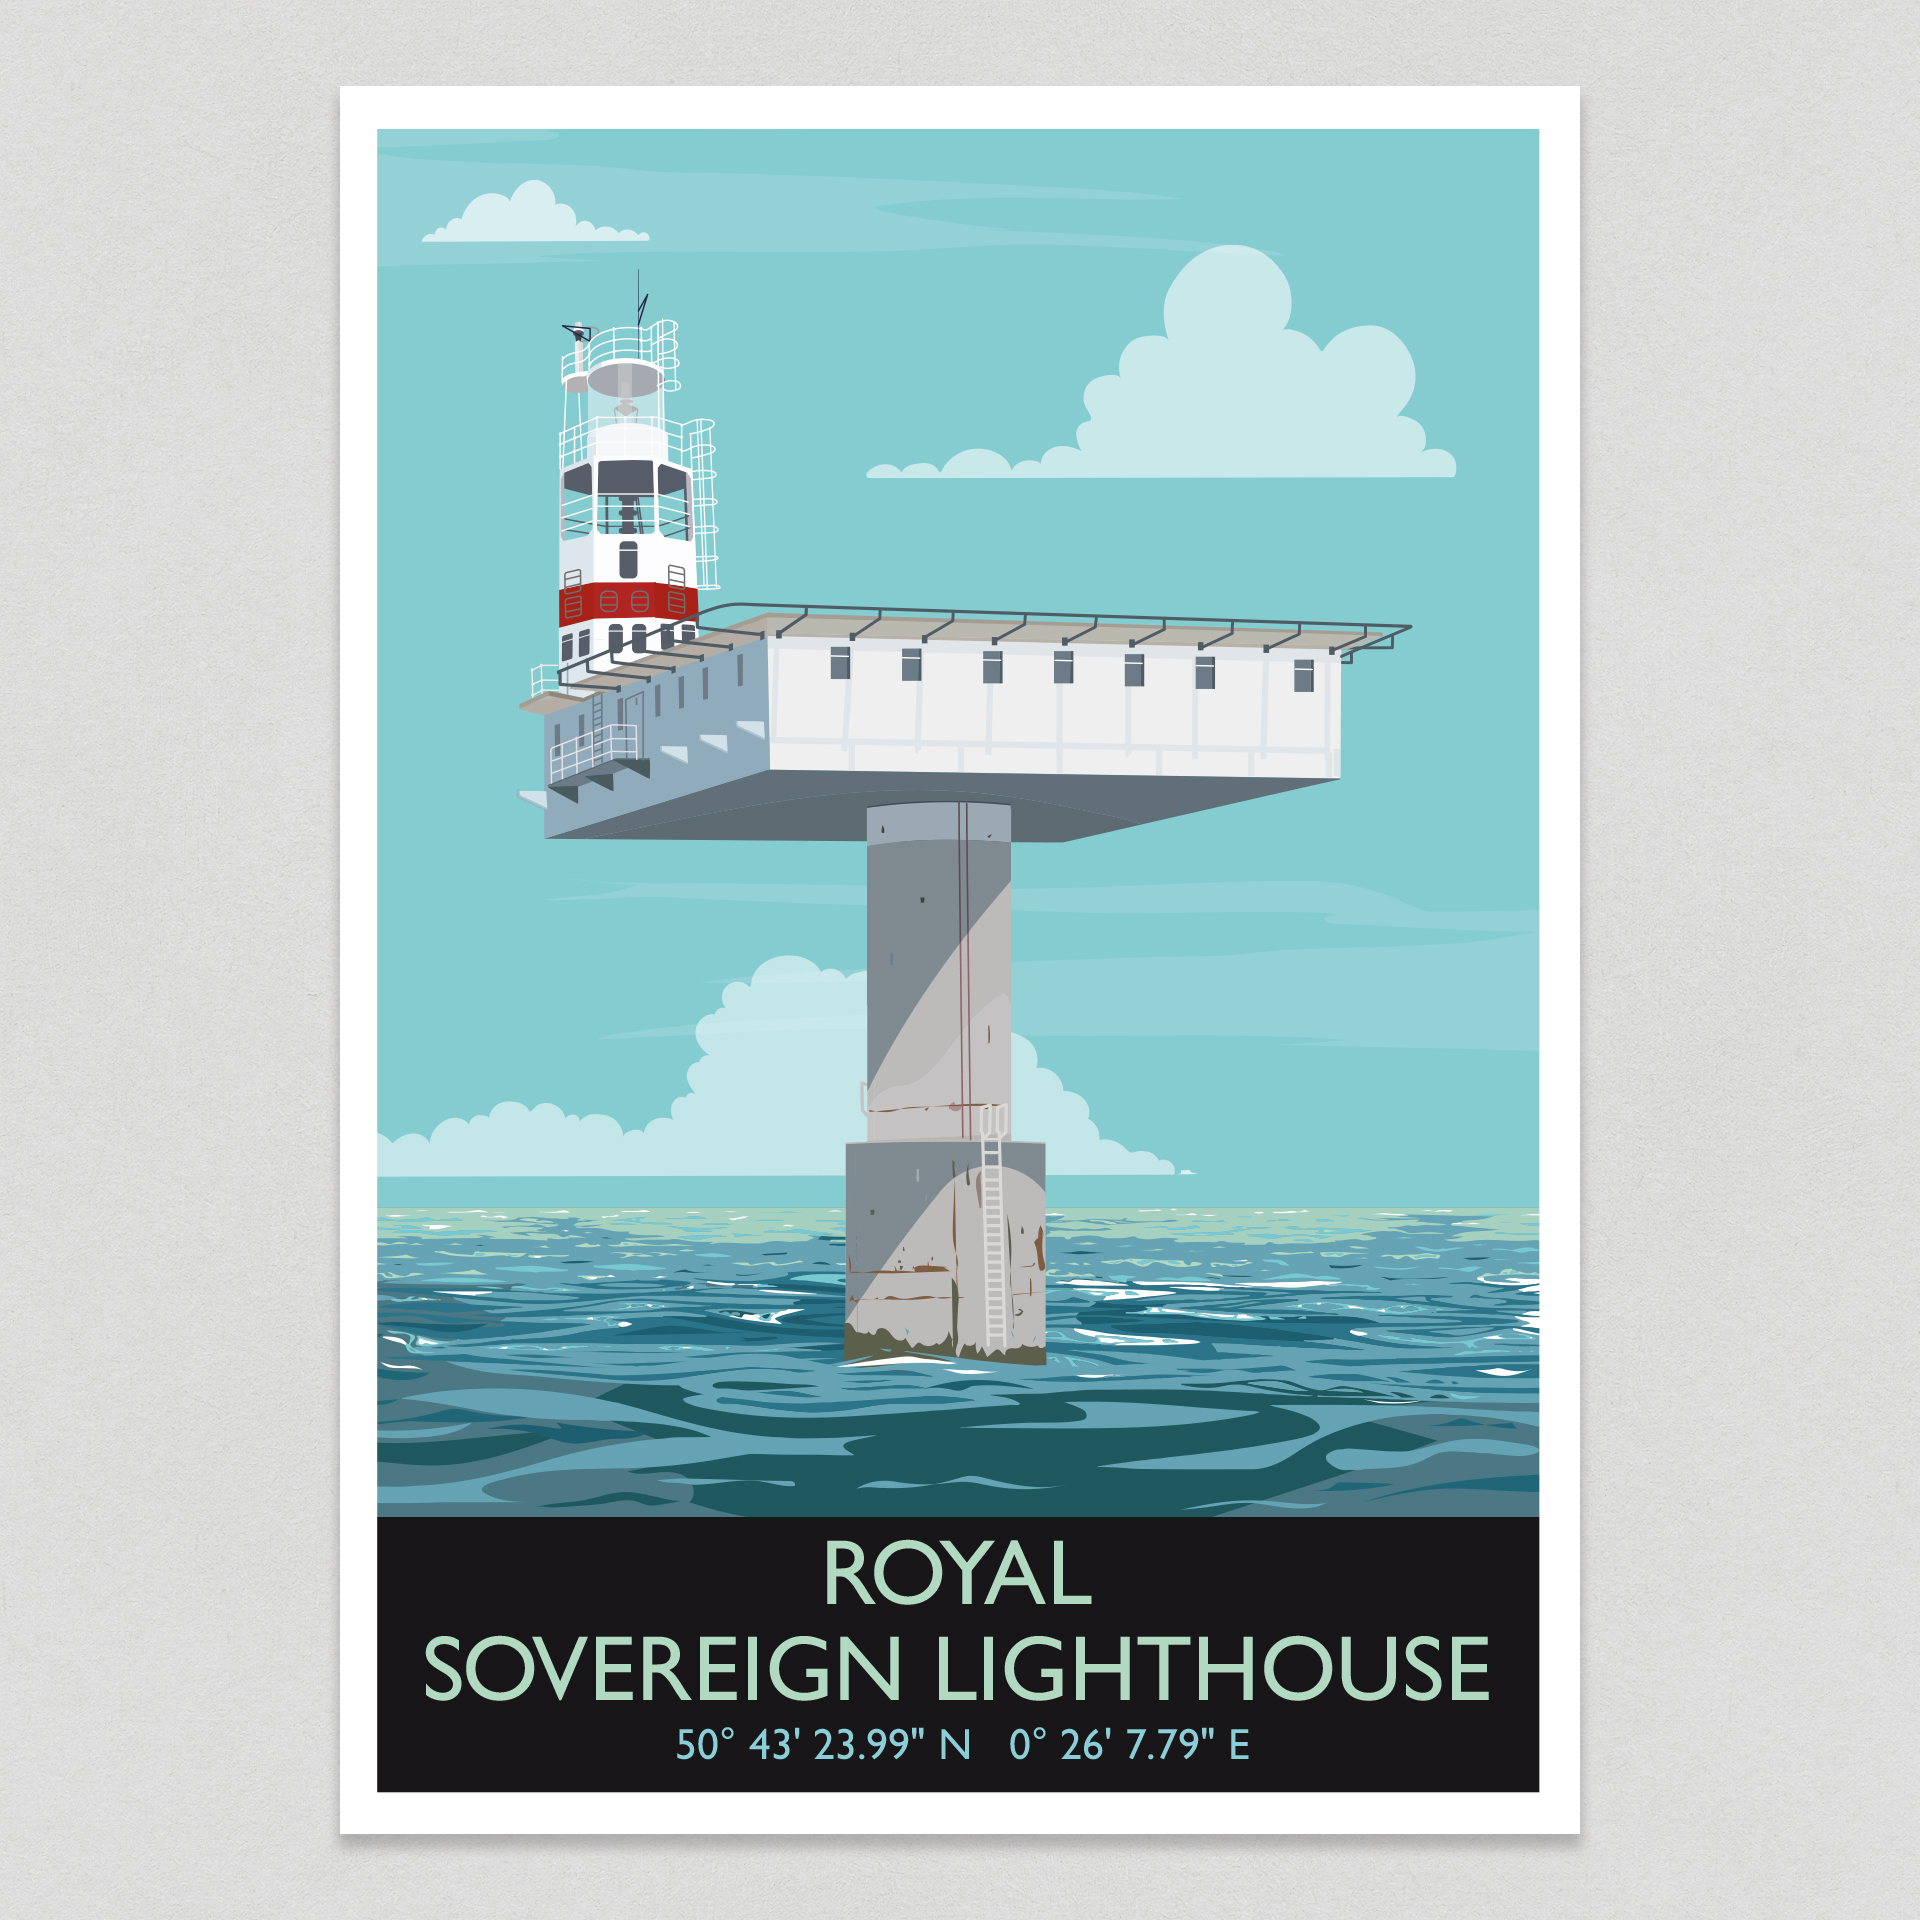 6 x Royal Sovereign Lighthouse Postcards